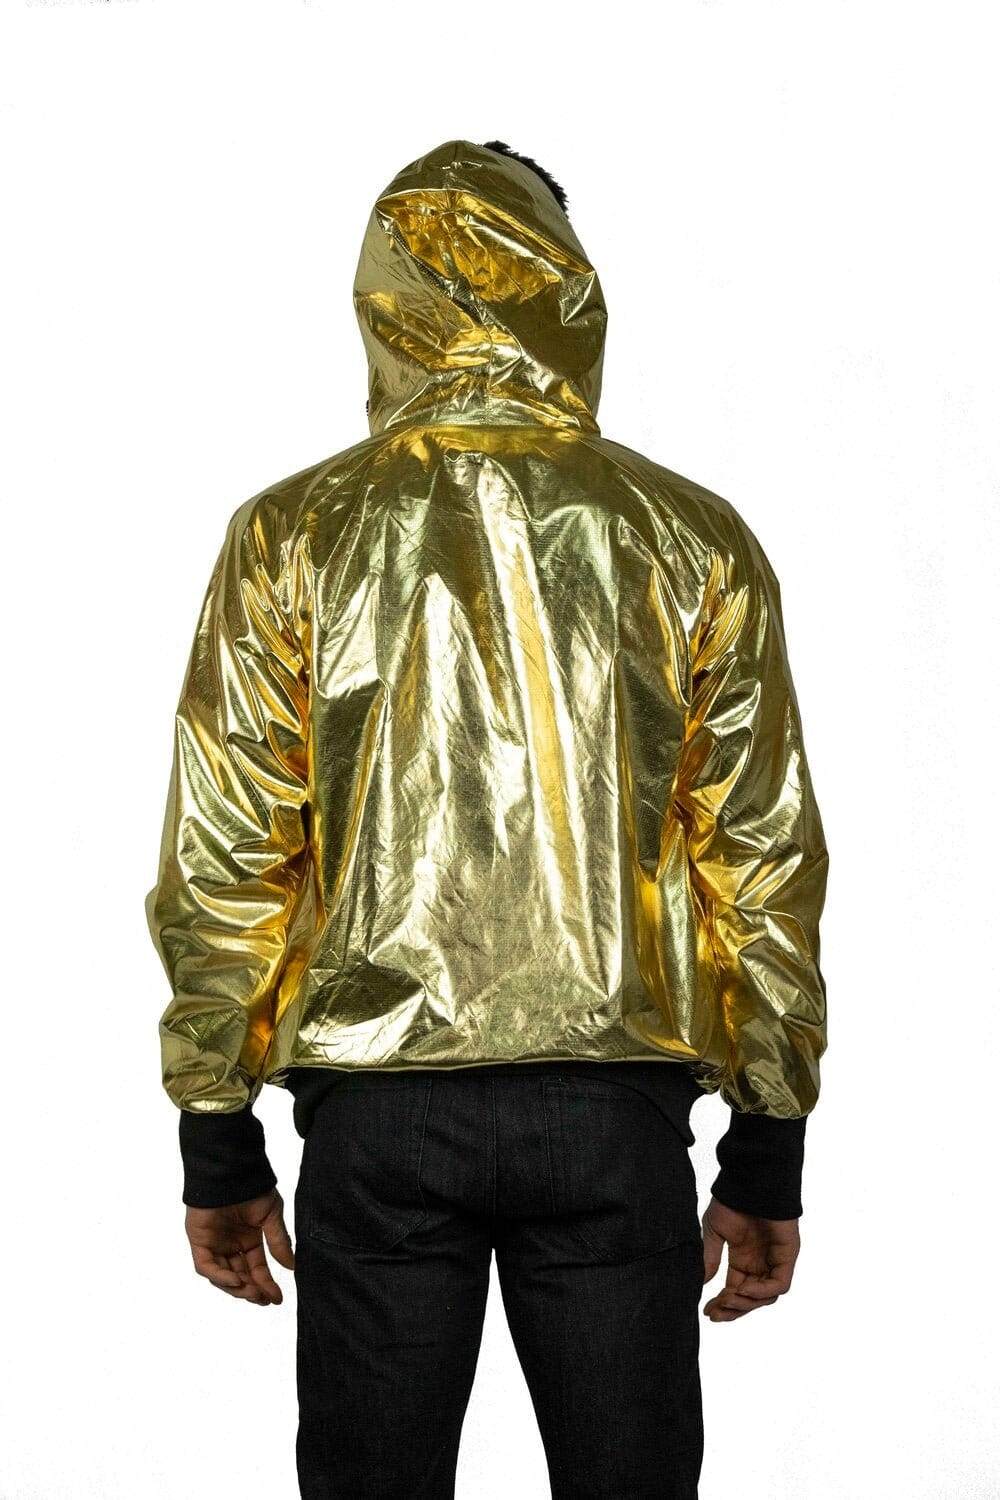 mens metallic gold windbreaker raincoat hoodie for festivals by Love Khaos